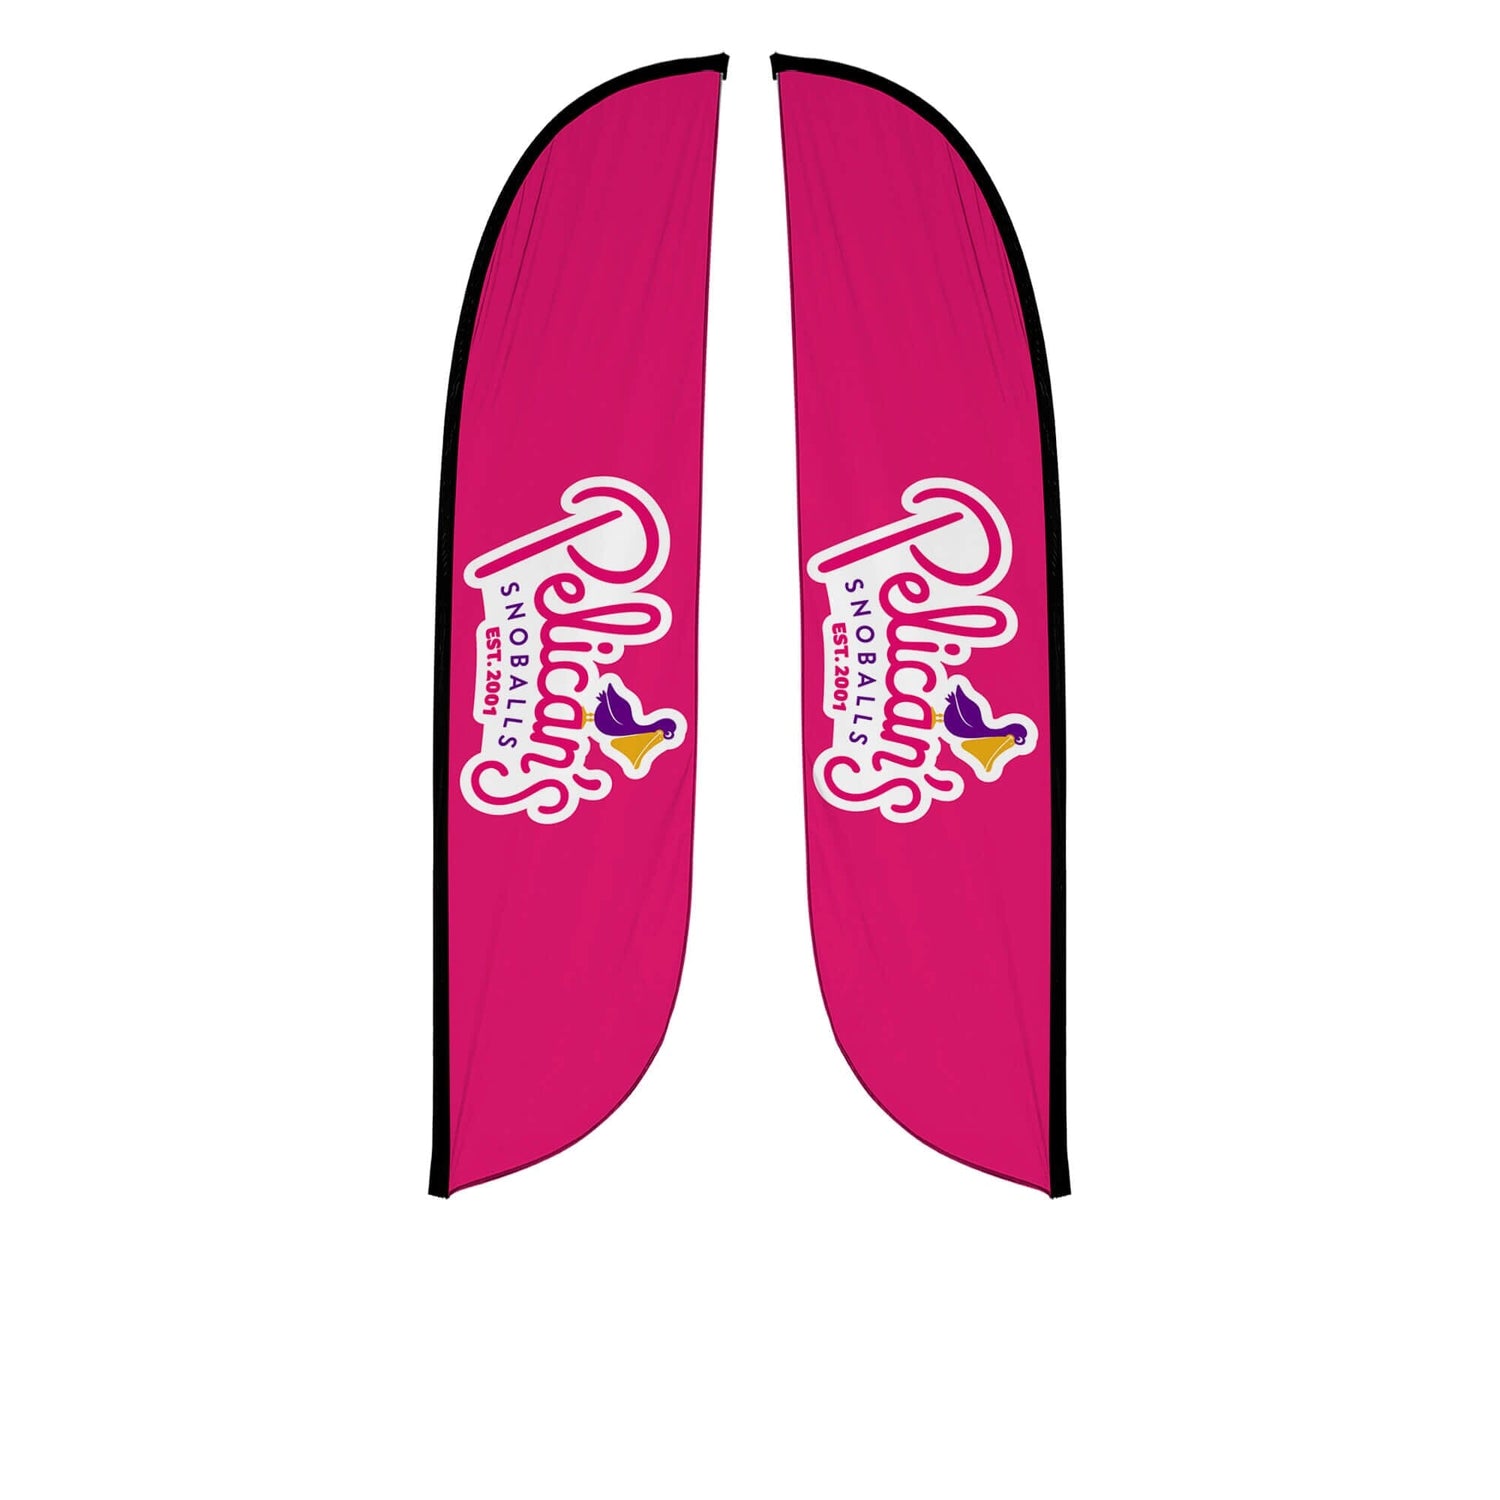 Pelican's Snoballs "Logo" 12ft Feather Flag 